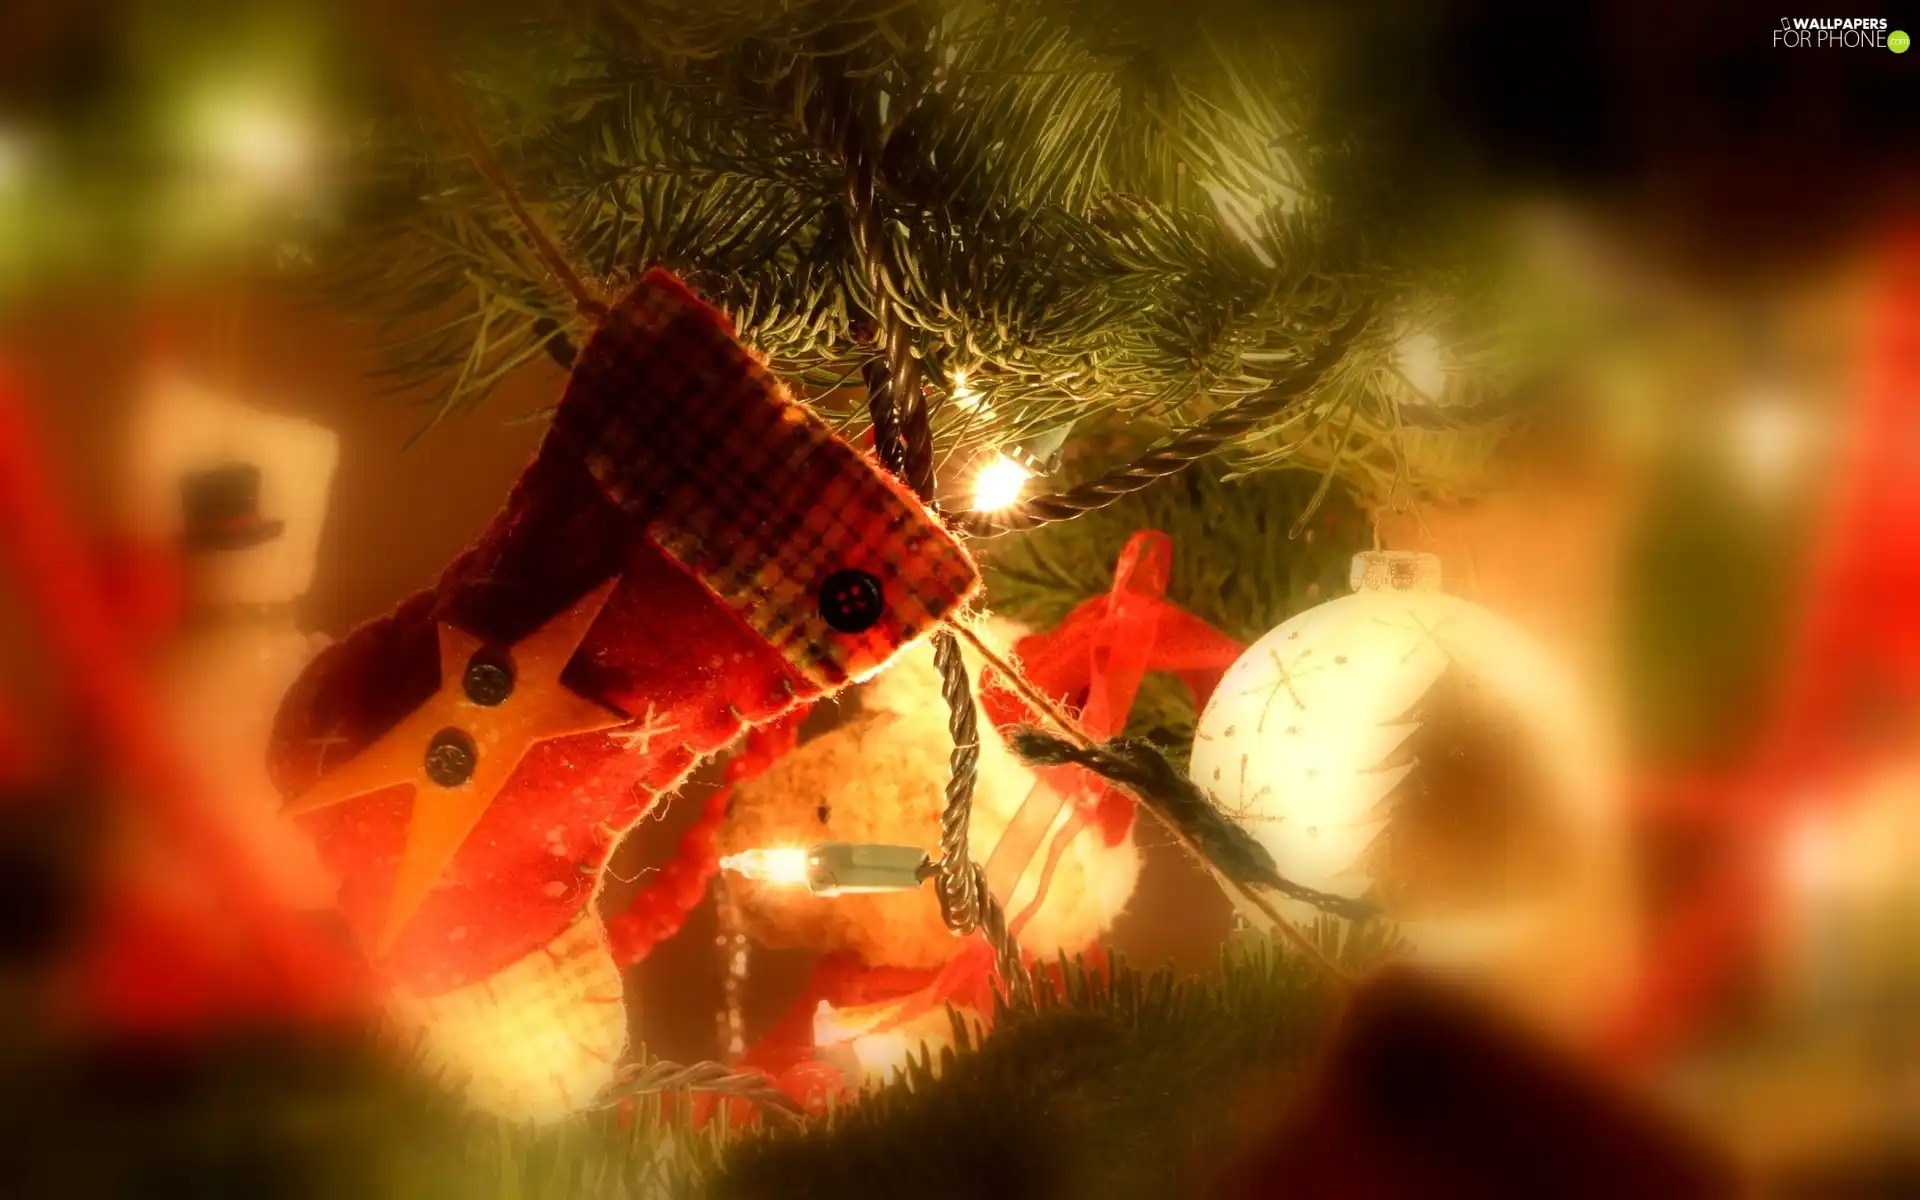 shoe, Christmas, ornamentation, Lights